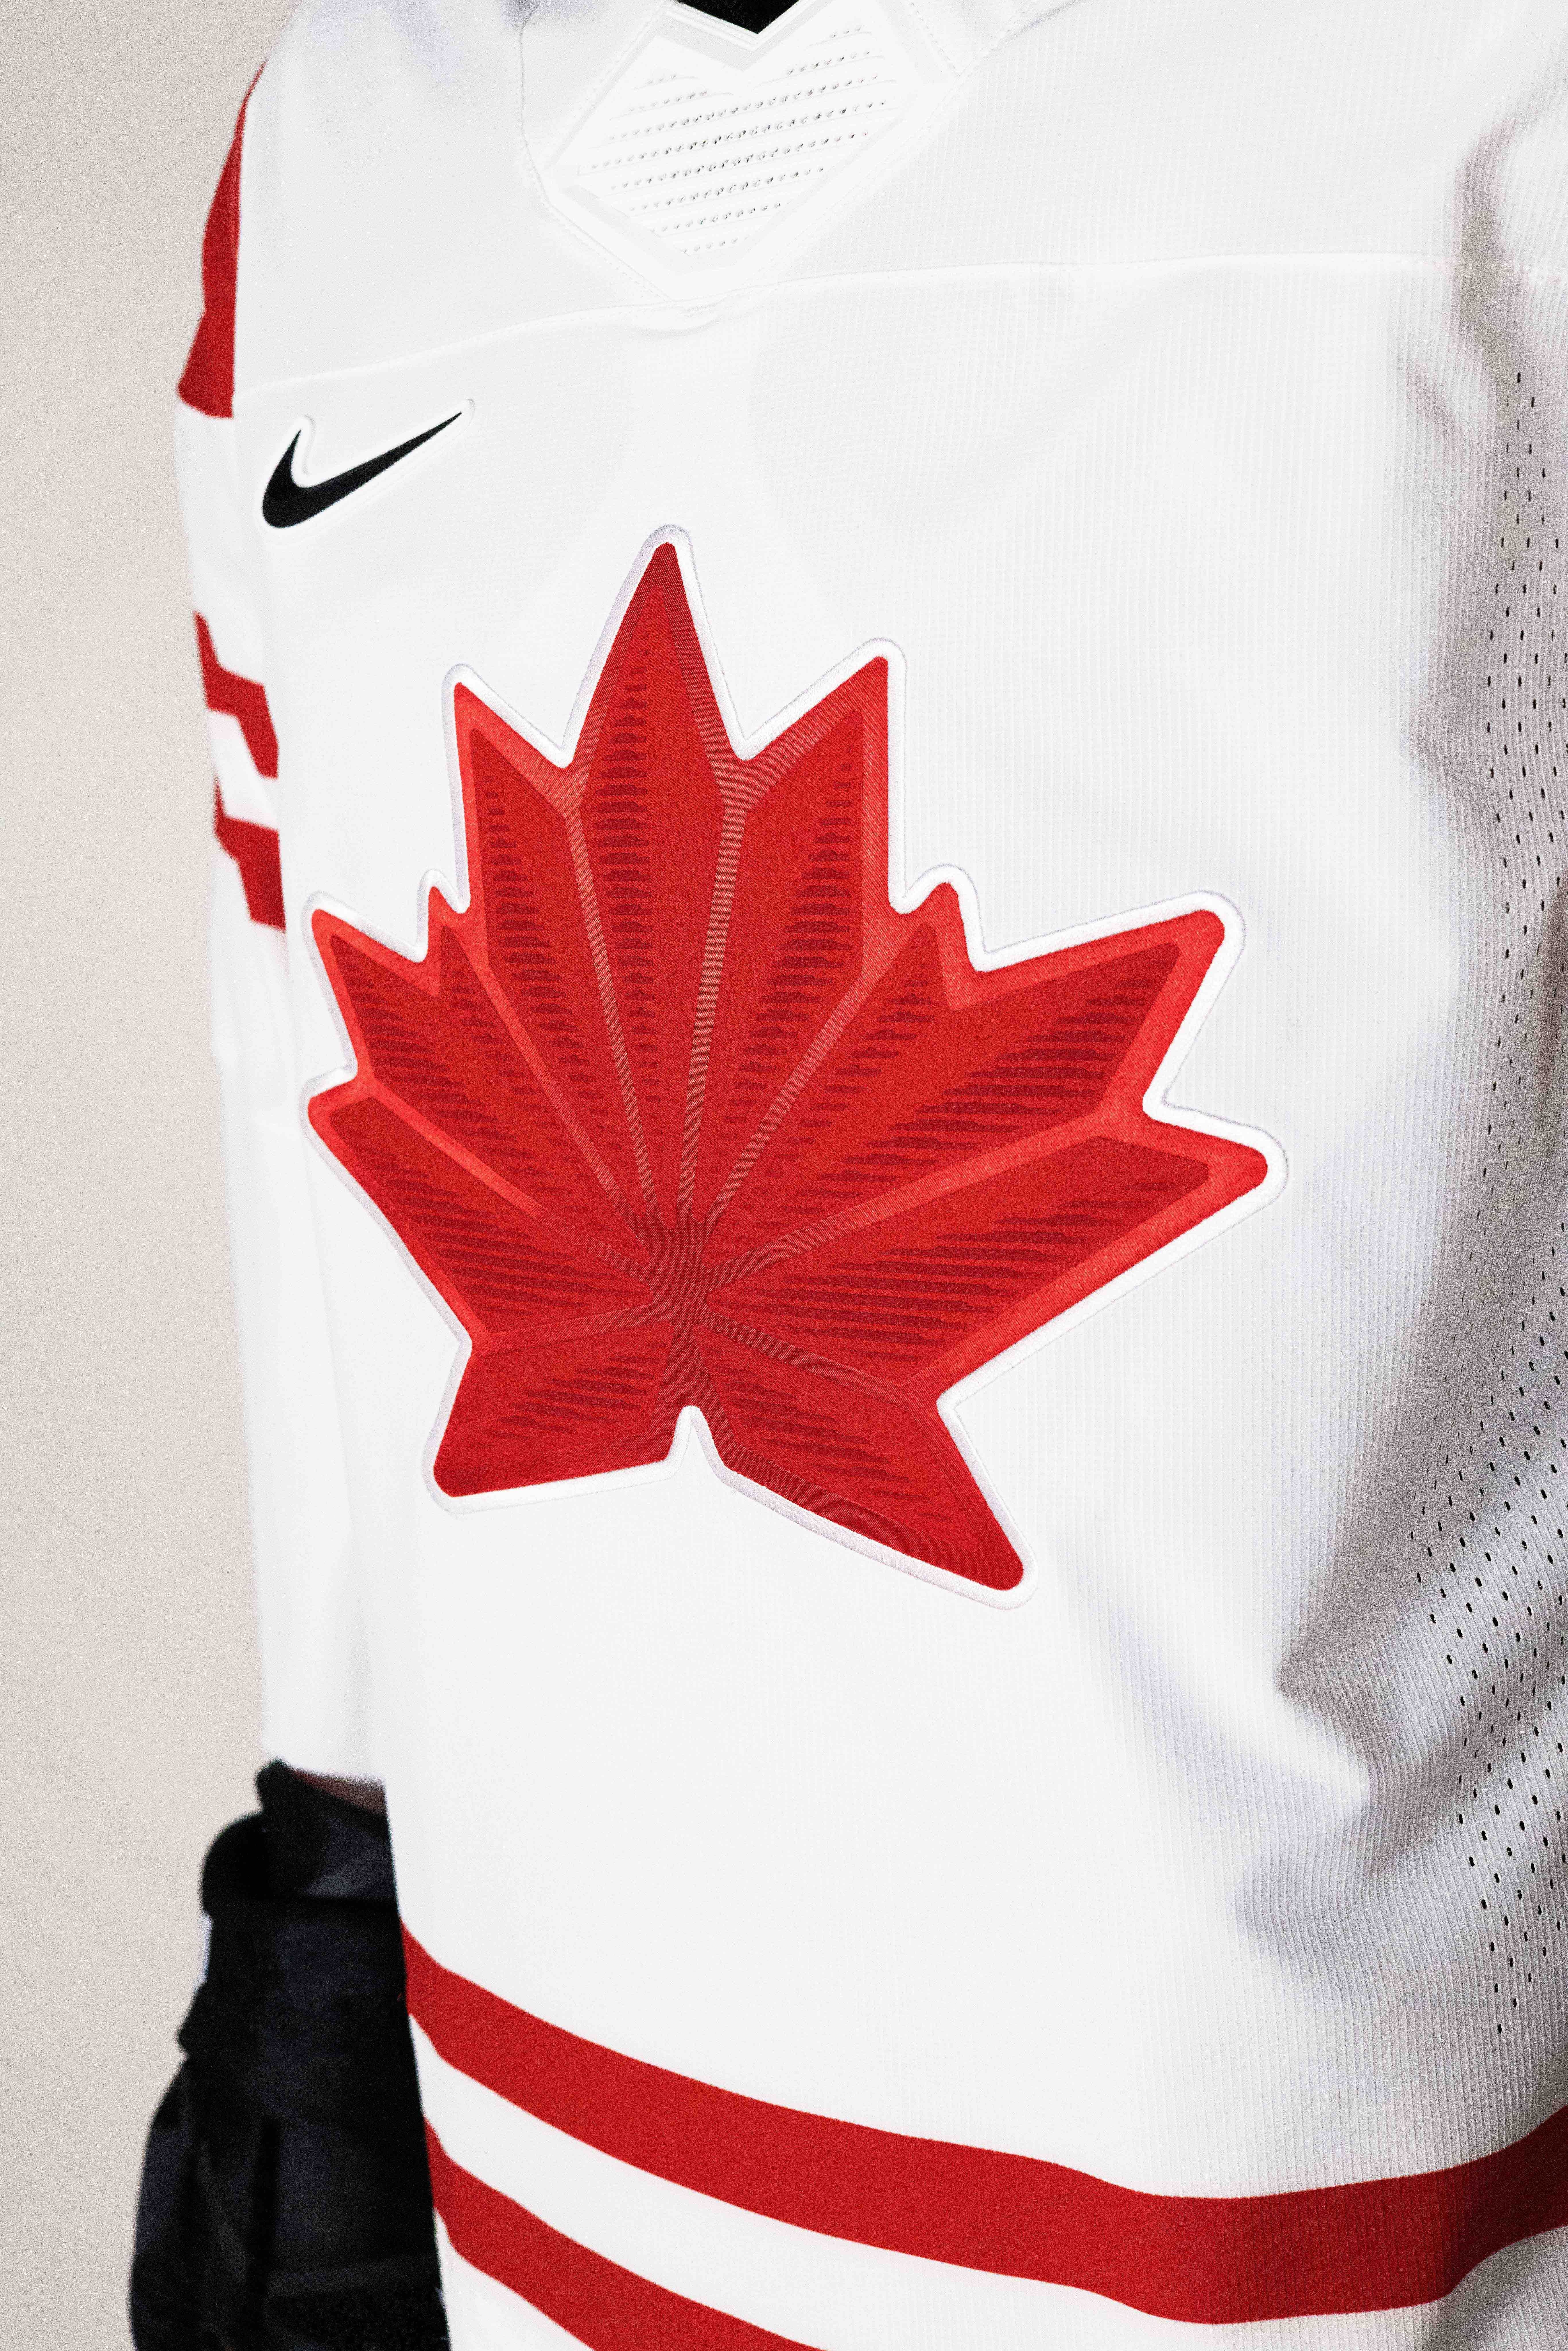 Hockey Canada unveils new jerseys for Beijing 2022 Olympics and Paralympics